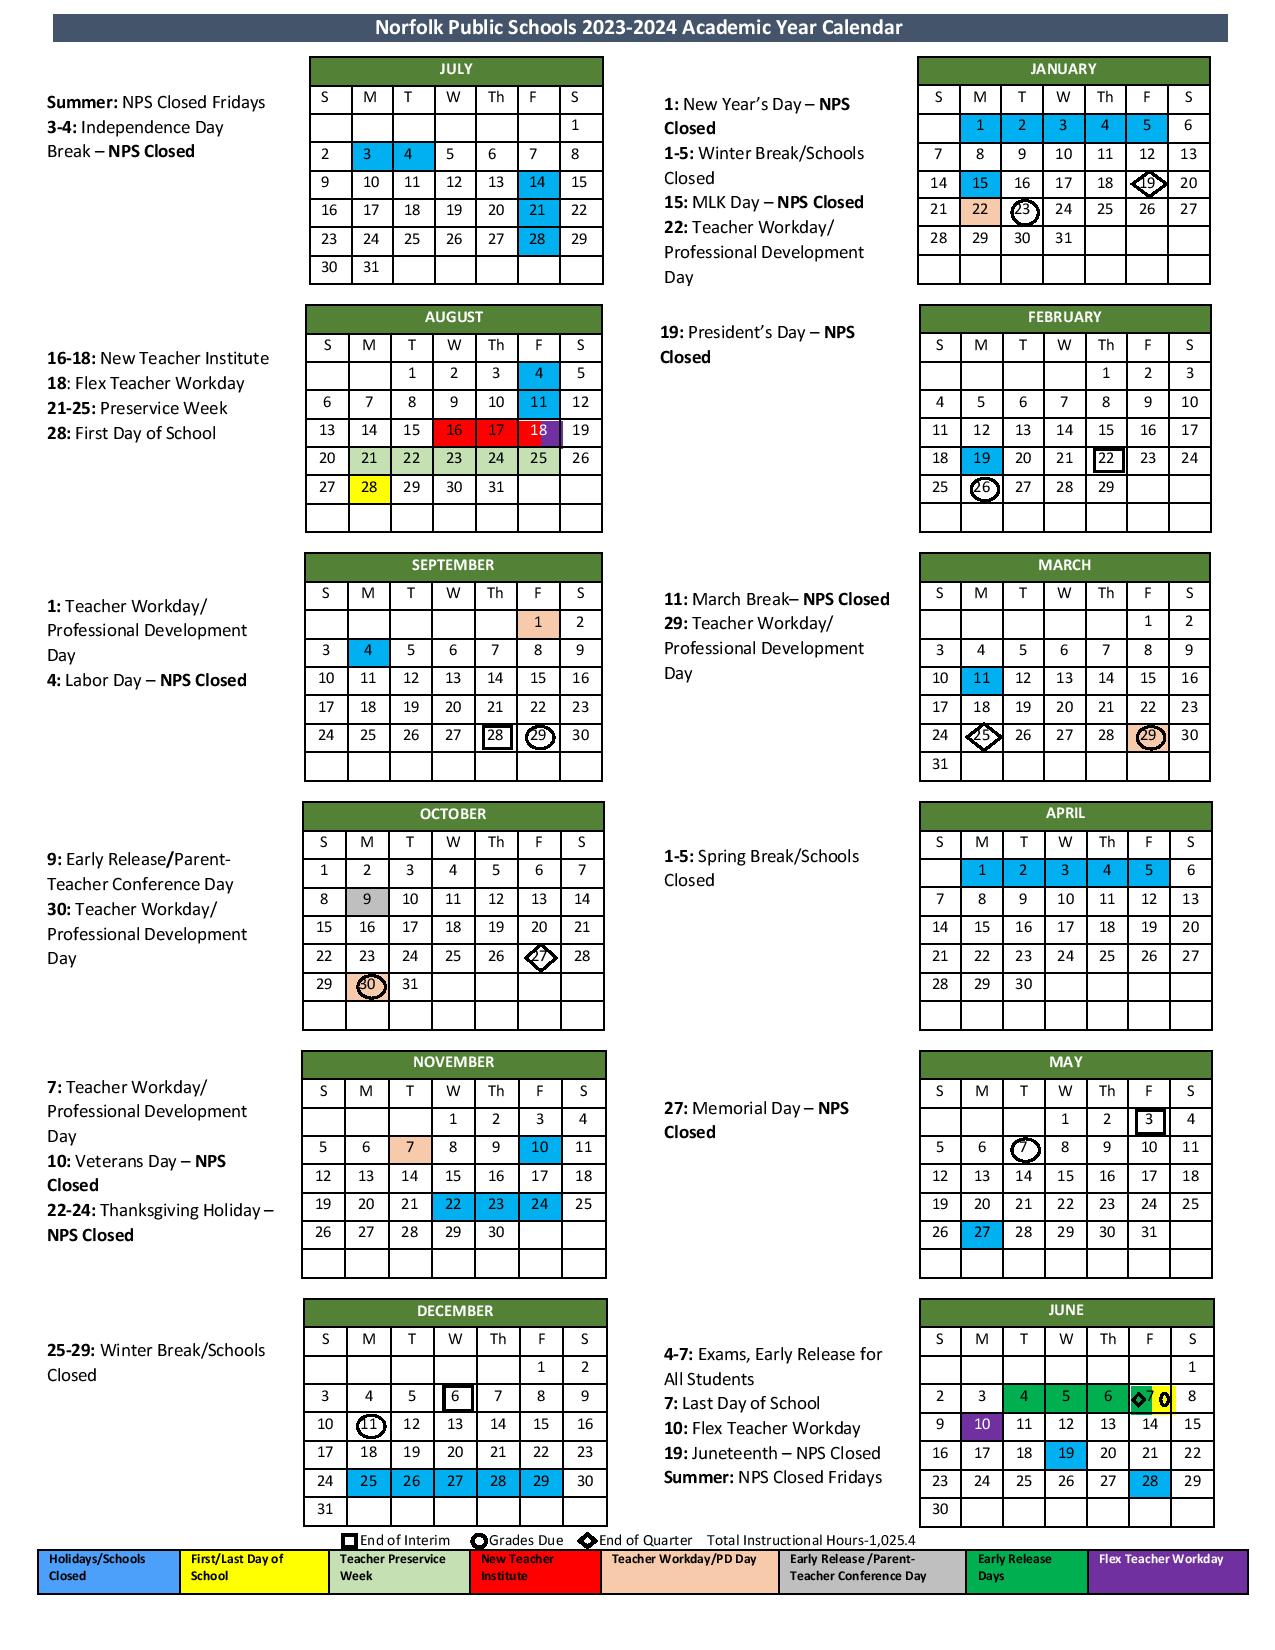 Norfolk Public Schools Calendar 2023 2024 Holidays PDF